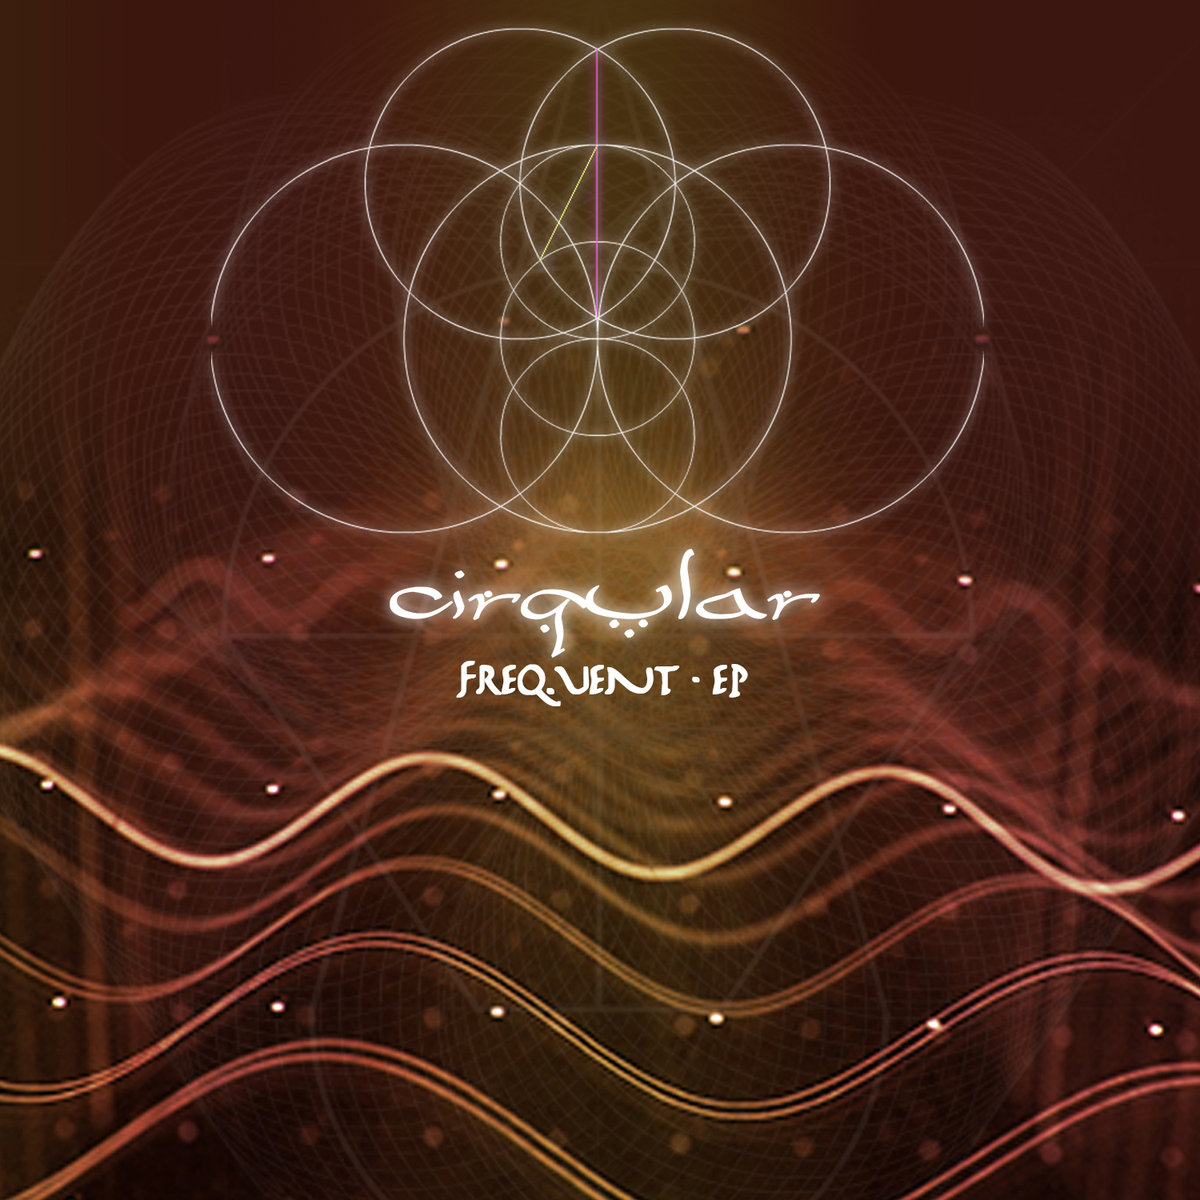 Cirqular feat. Mike Pipes - Biologic @ 'Freq.uent' album (bass, electronic)